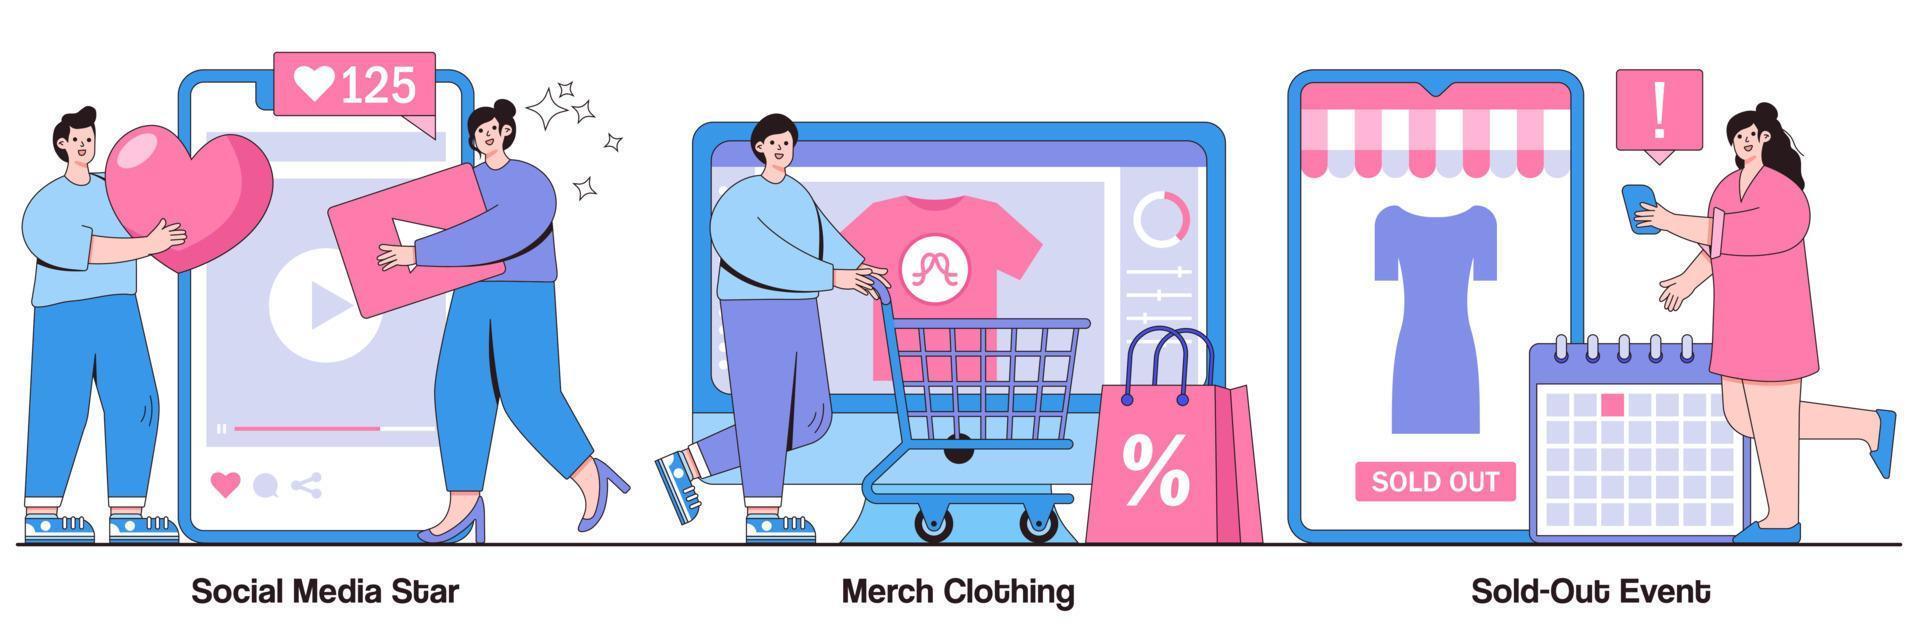 social media ster, merch kleding en uitverkocht evenement geïllustreerd pakket vector